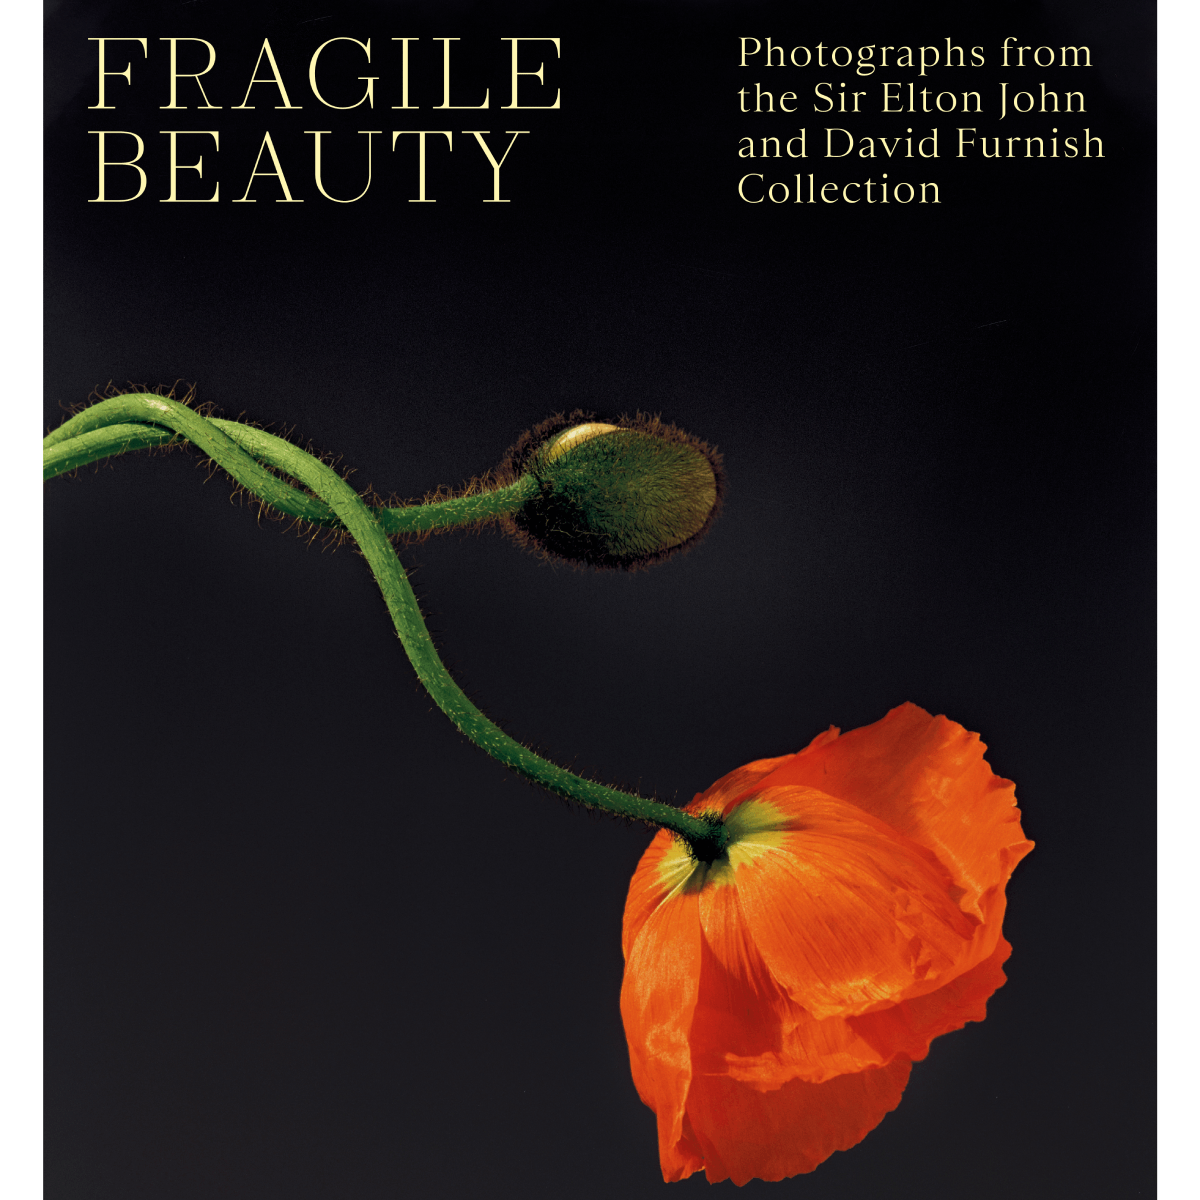 Fragile Beauty exhibition book - hardback